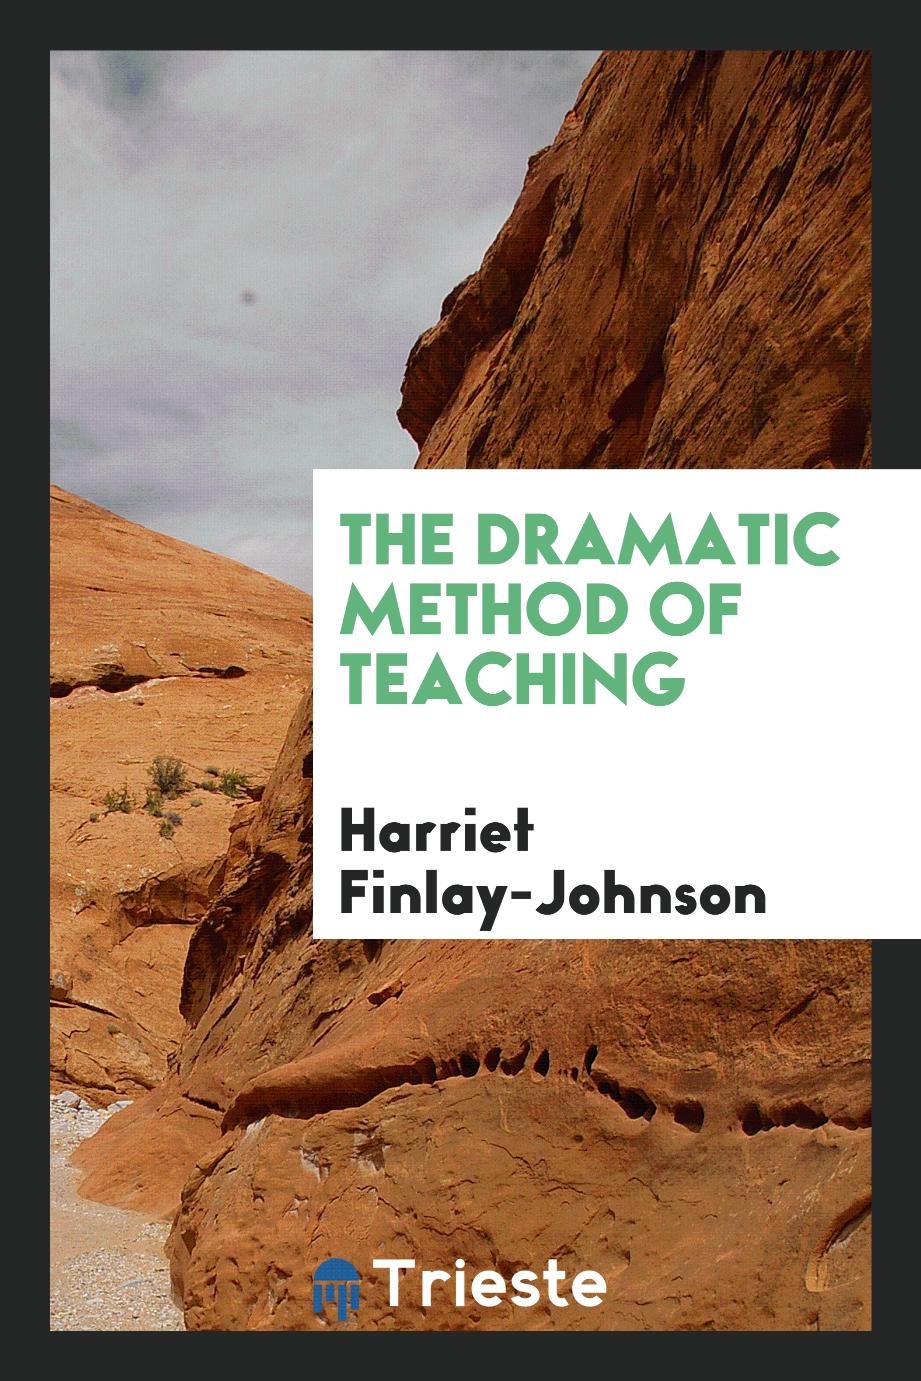 The dramatic method of teaching